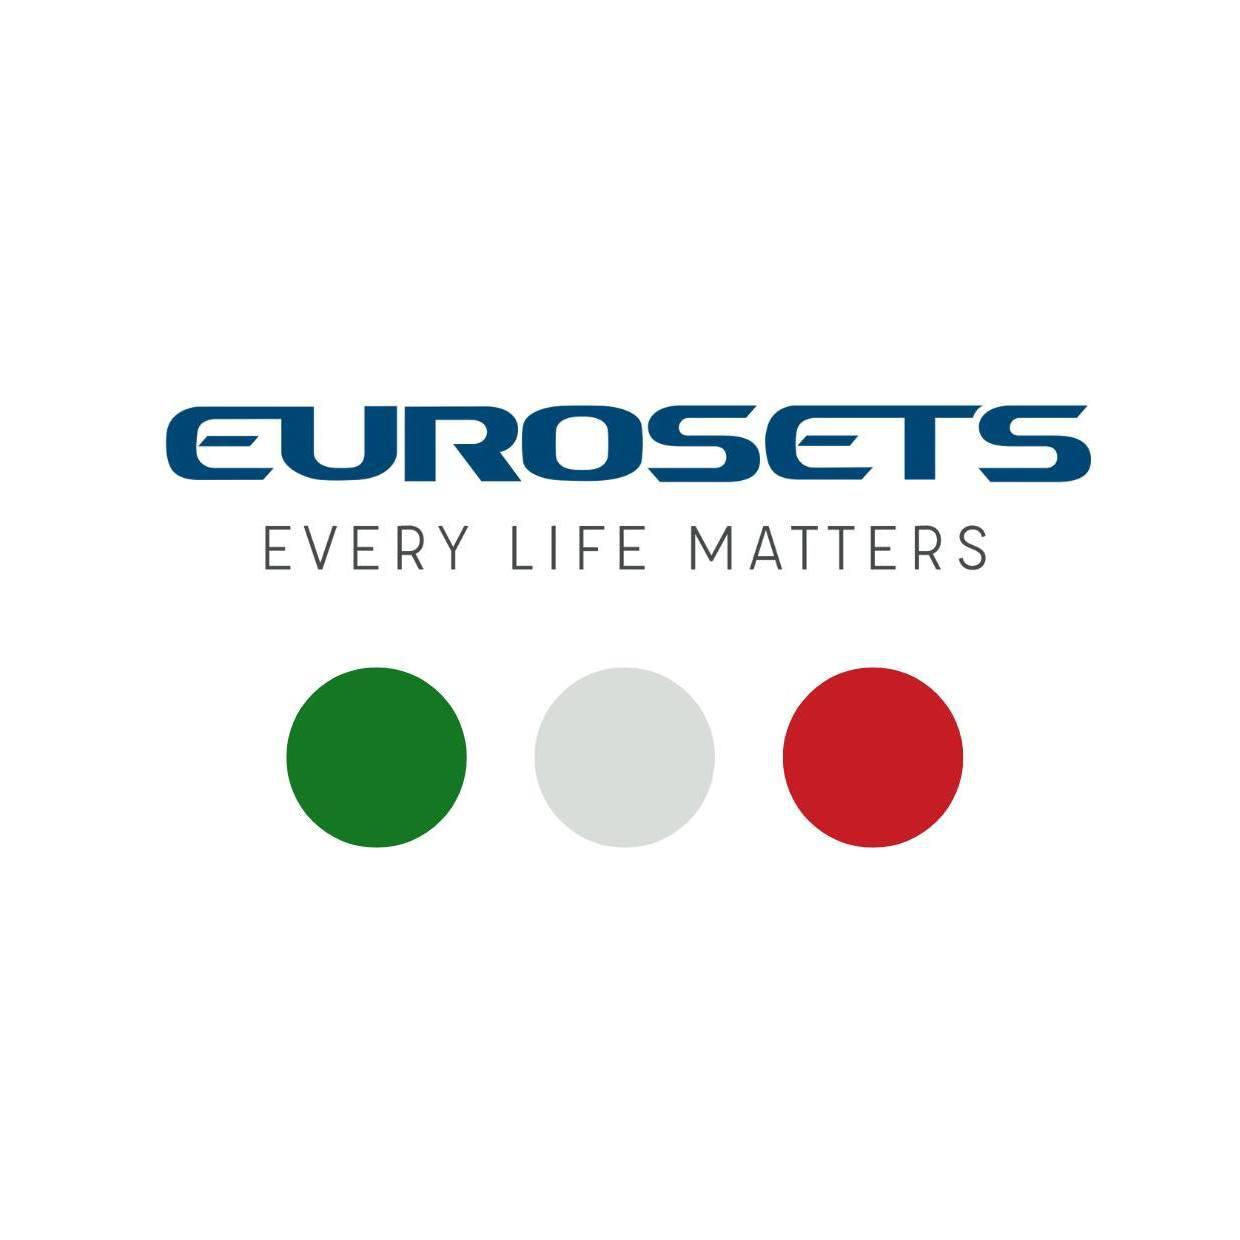 Eurosets